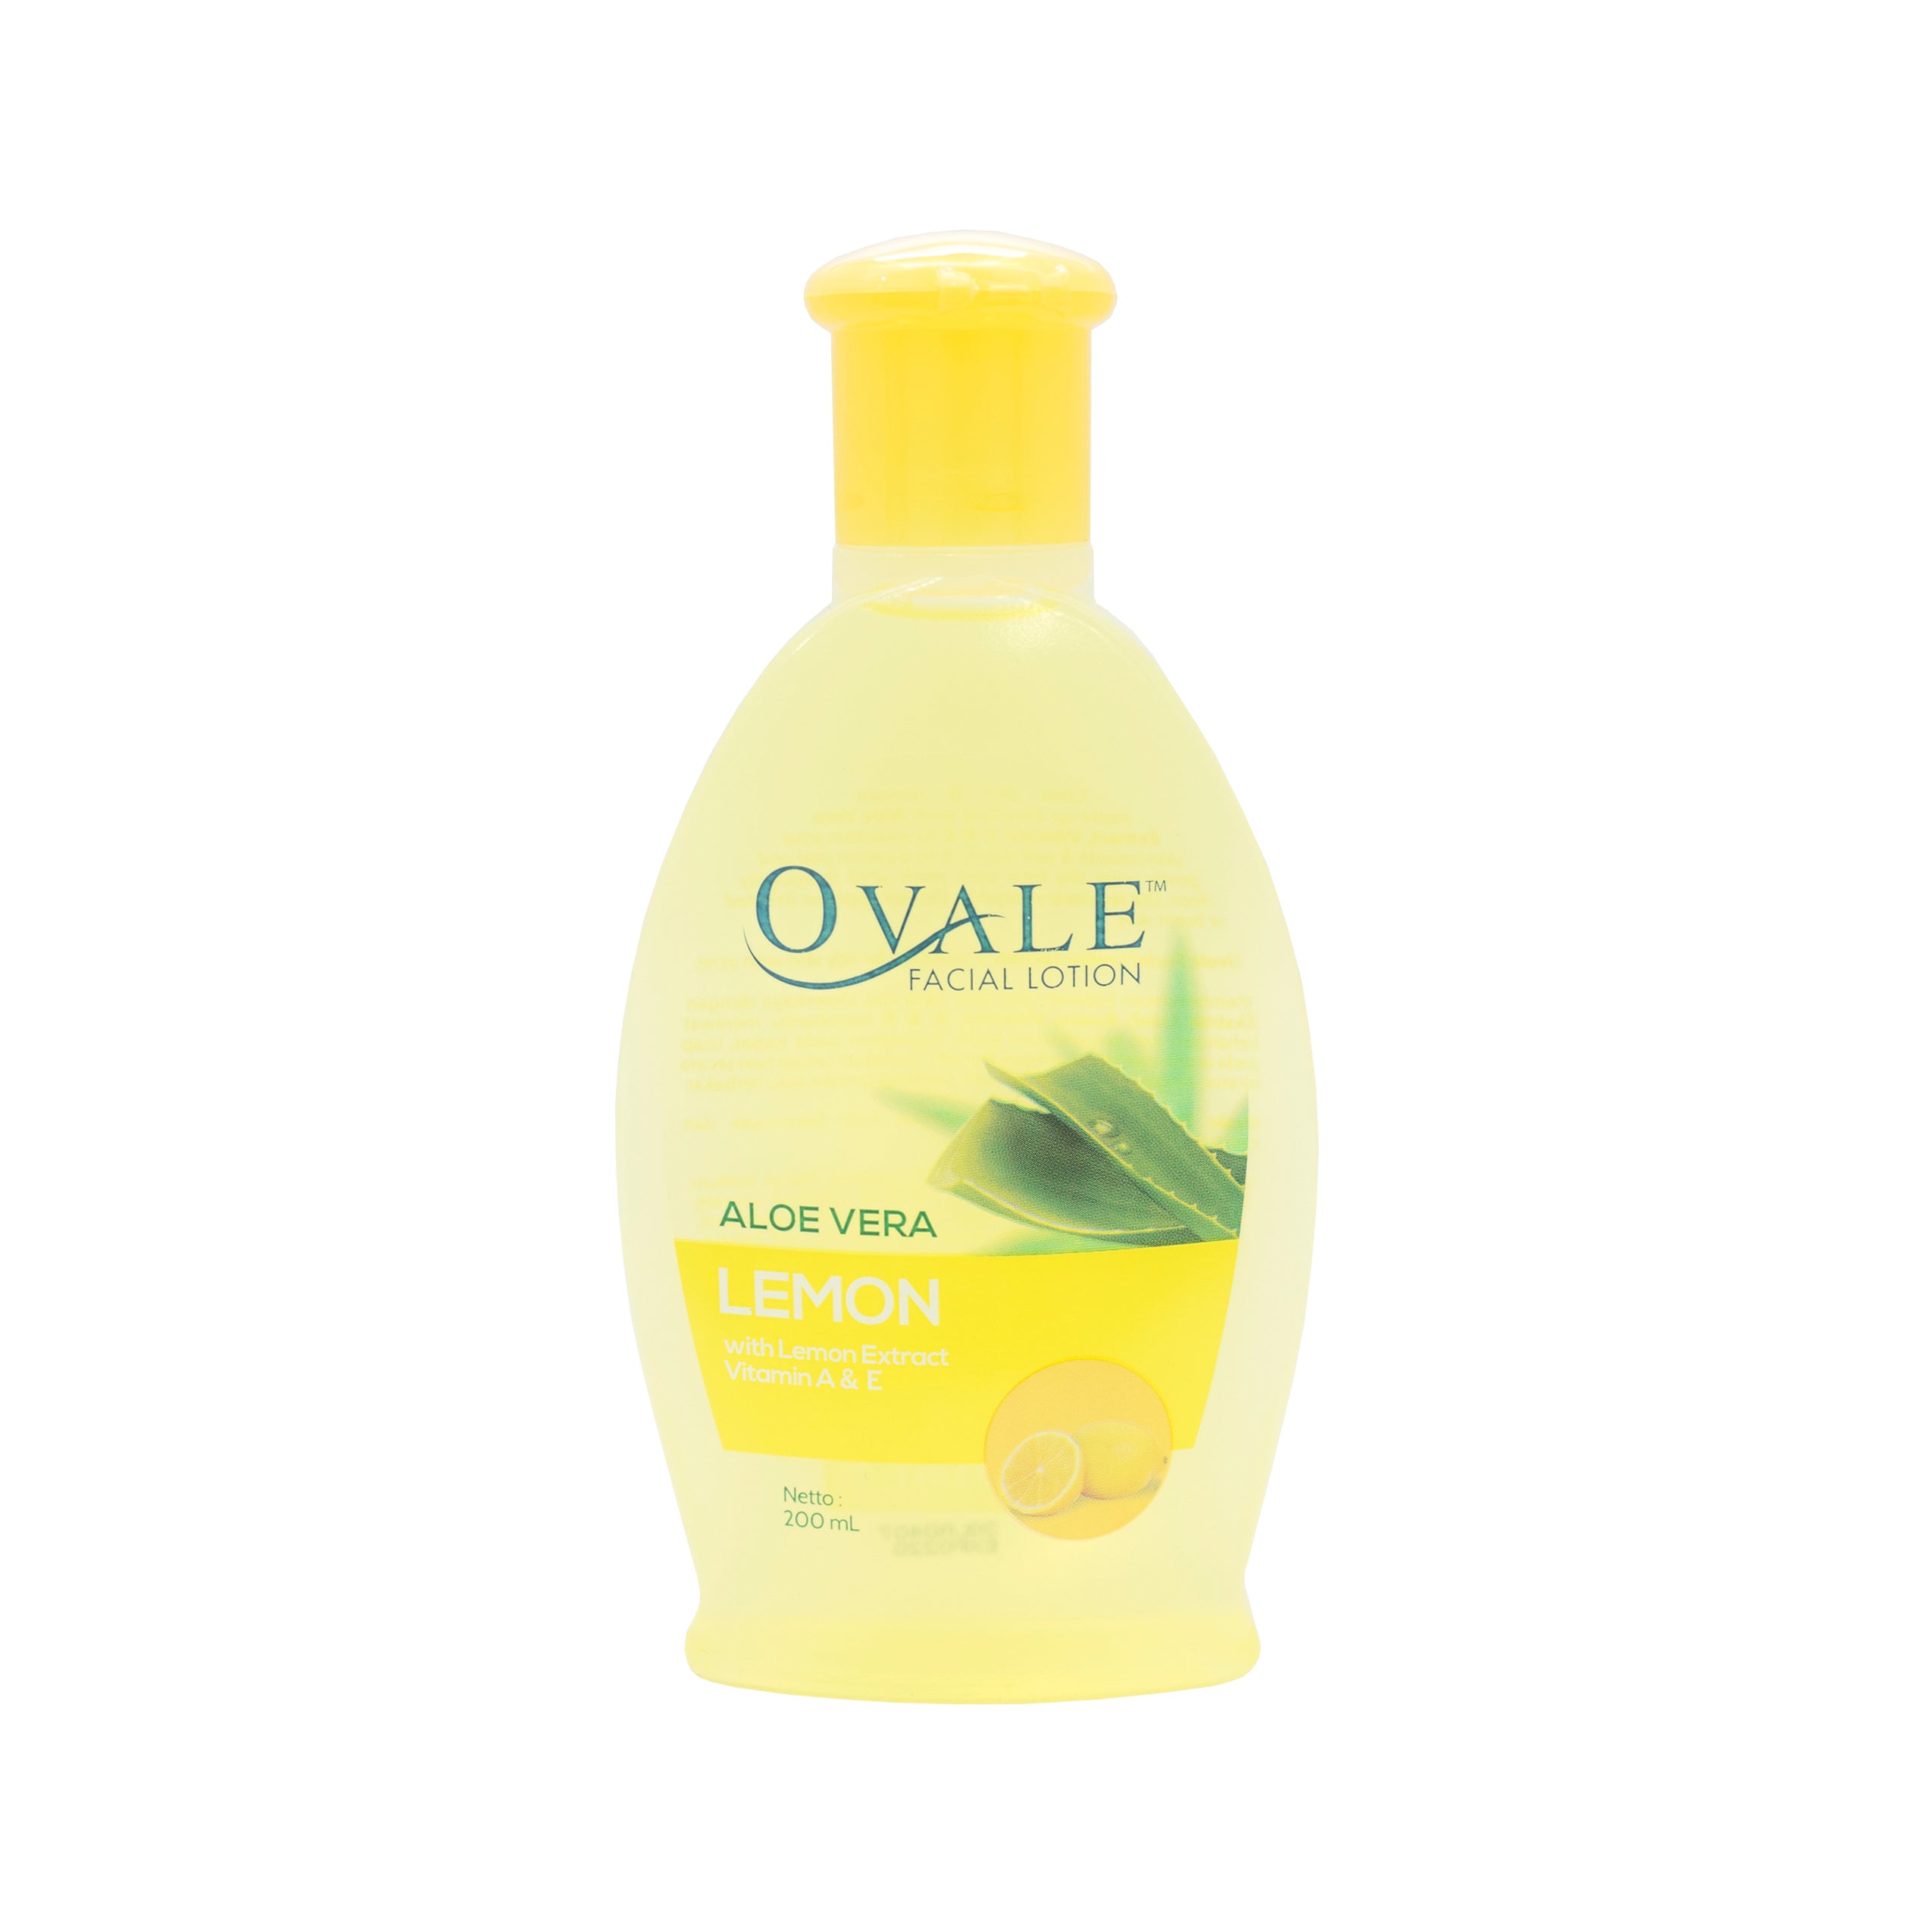 Ovale, Facial Lotion (Lemon), 200 ml